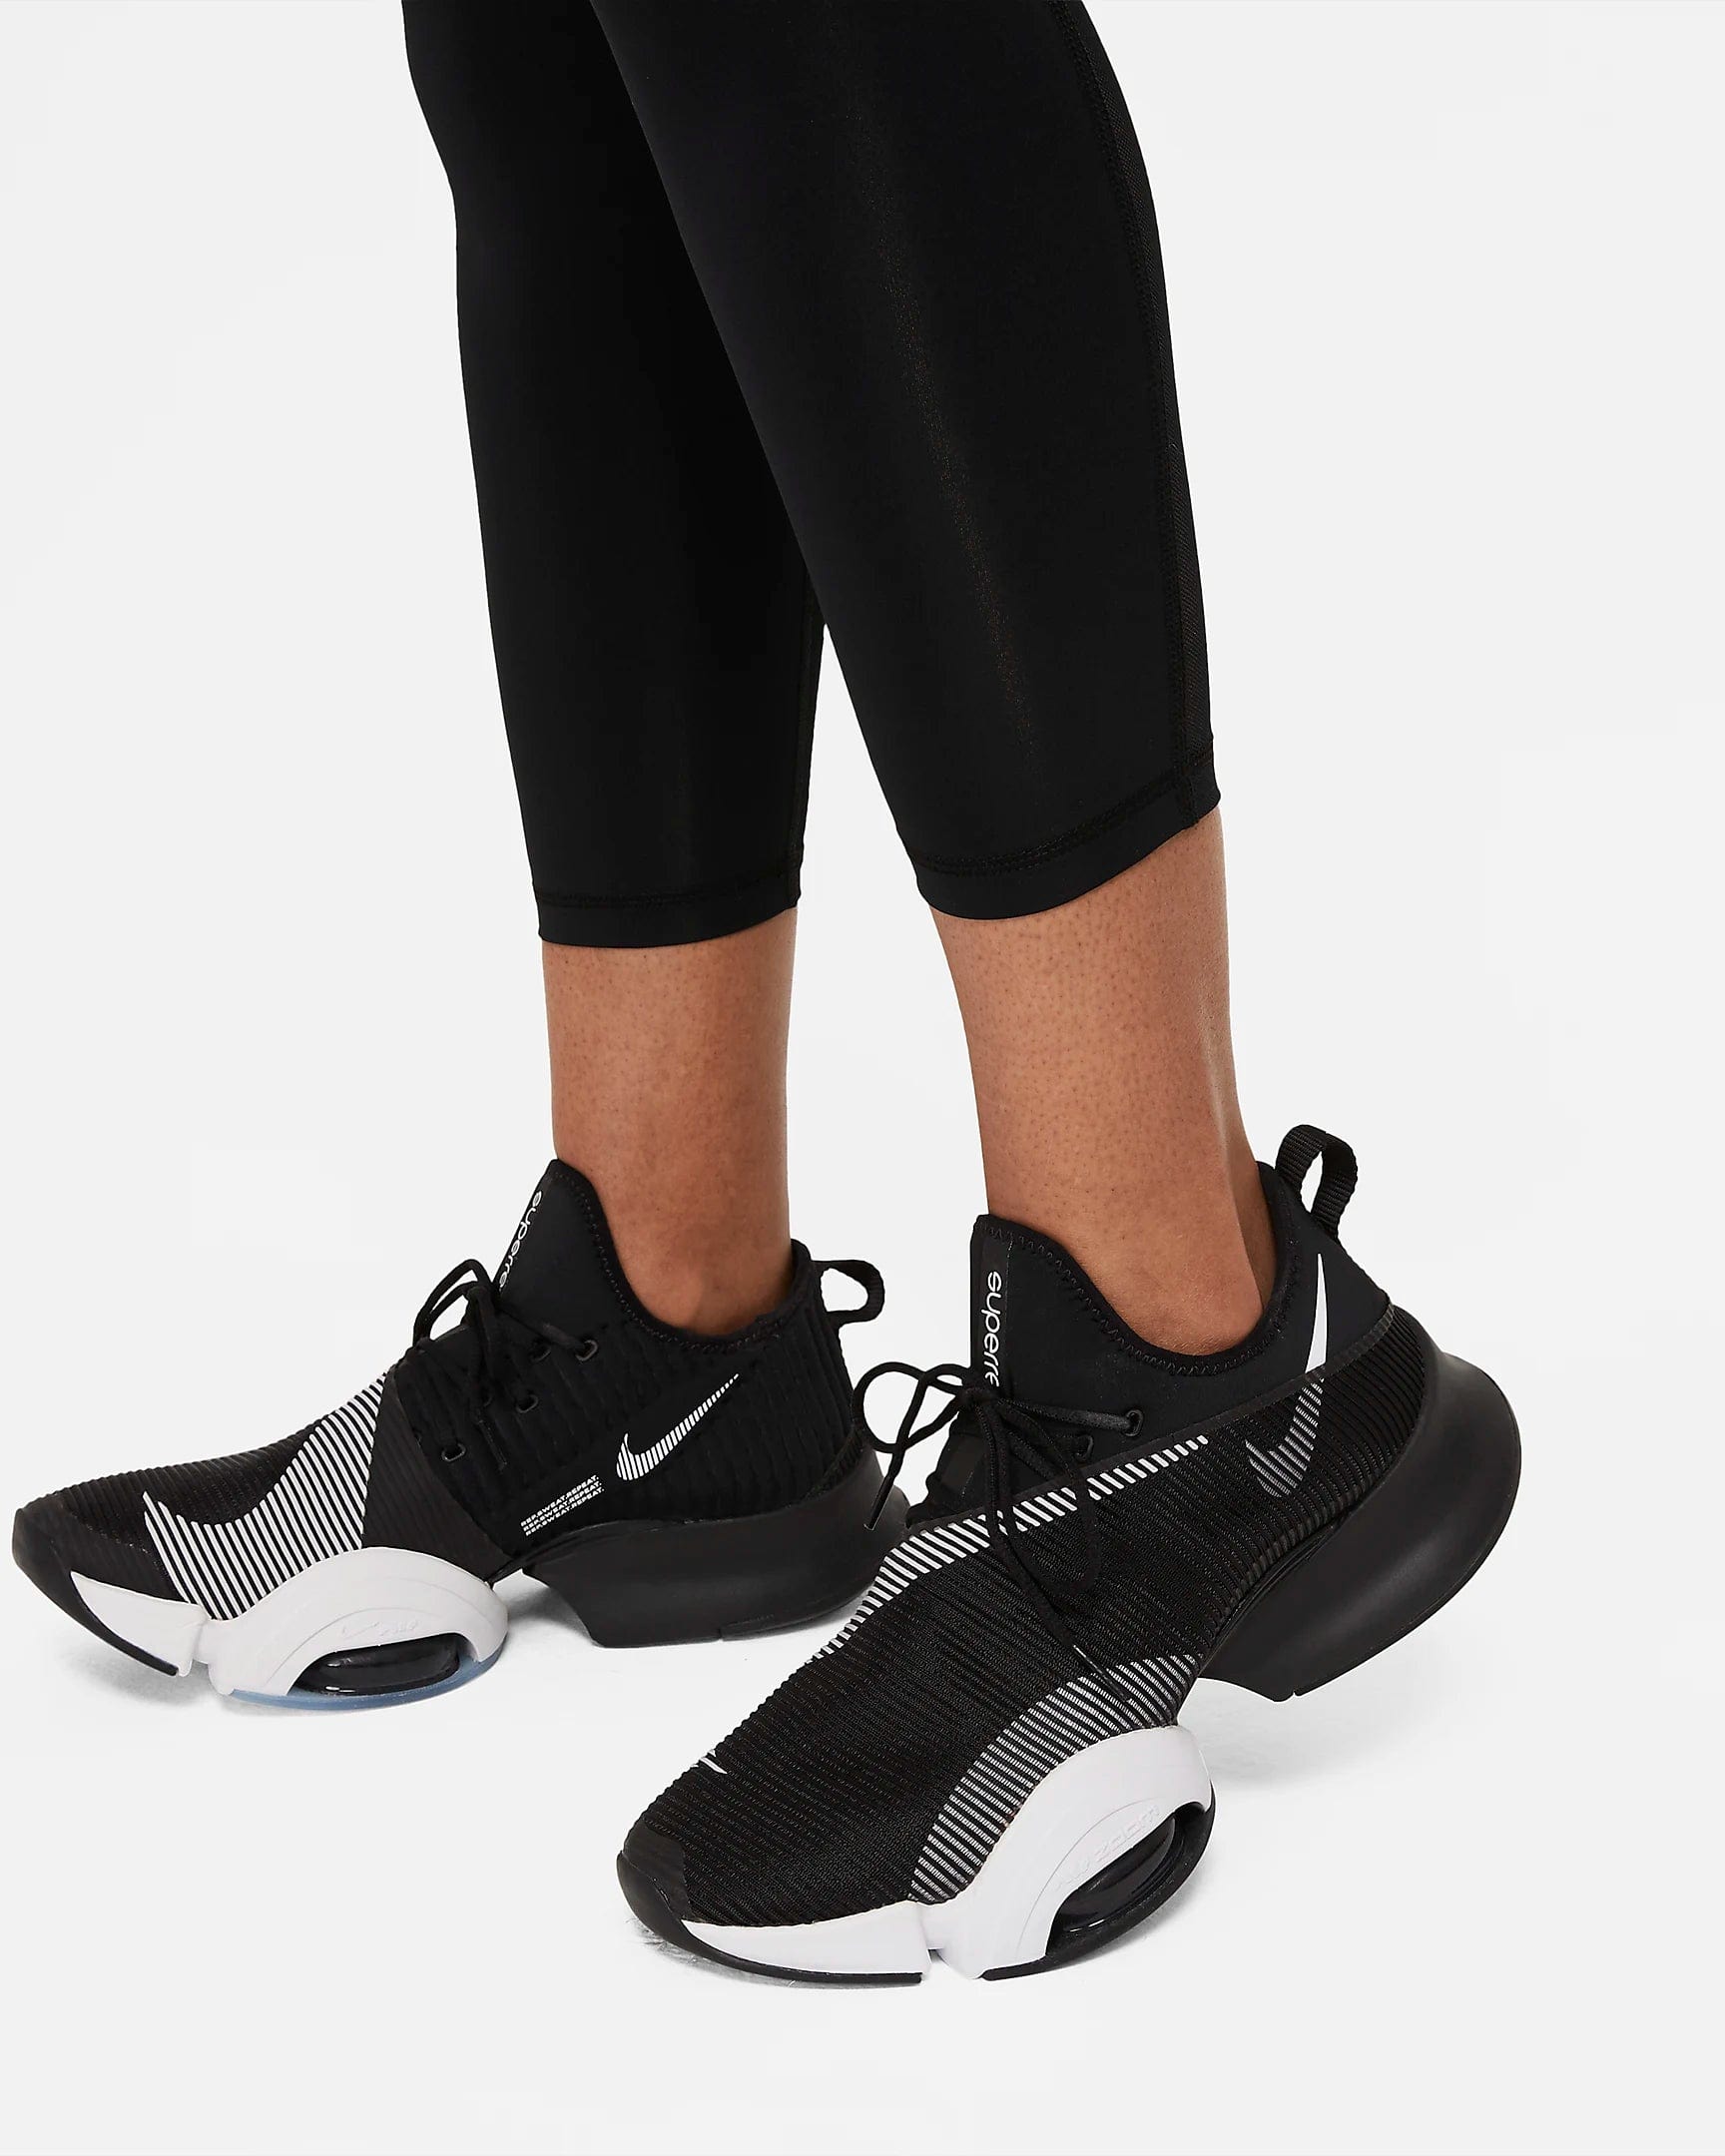 Nike Pro Womens Dri-FIT High Waisted 7/8 Tights Grey XS